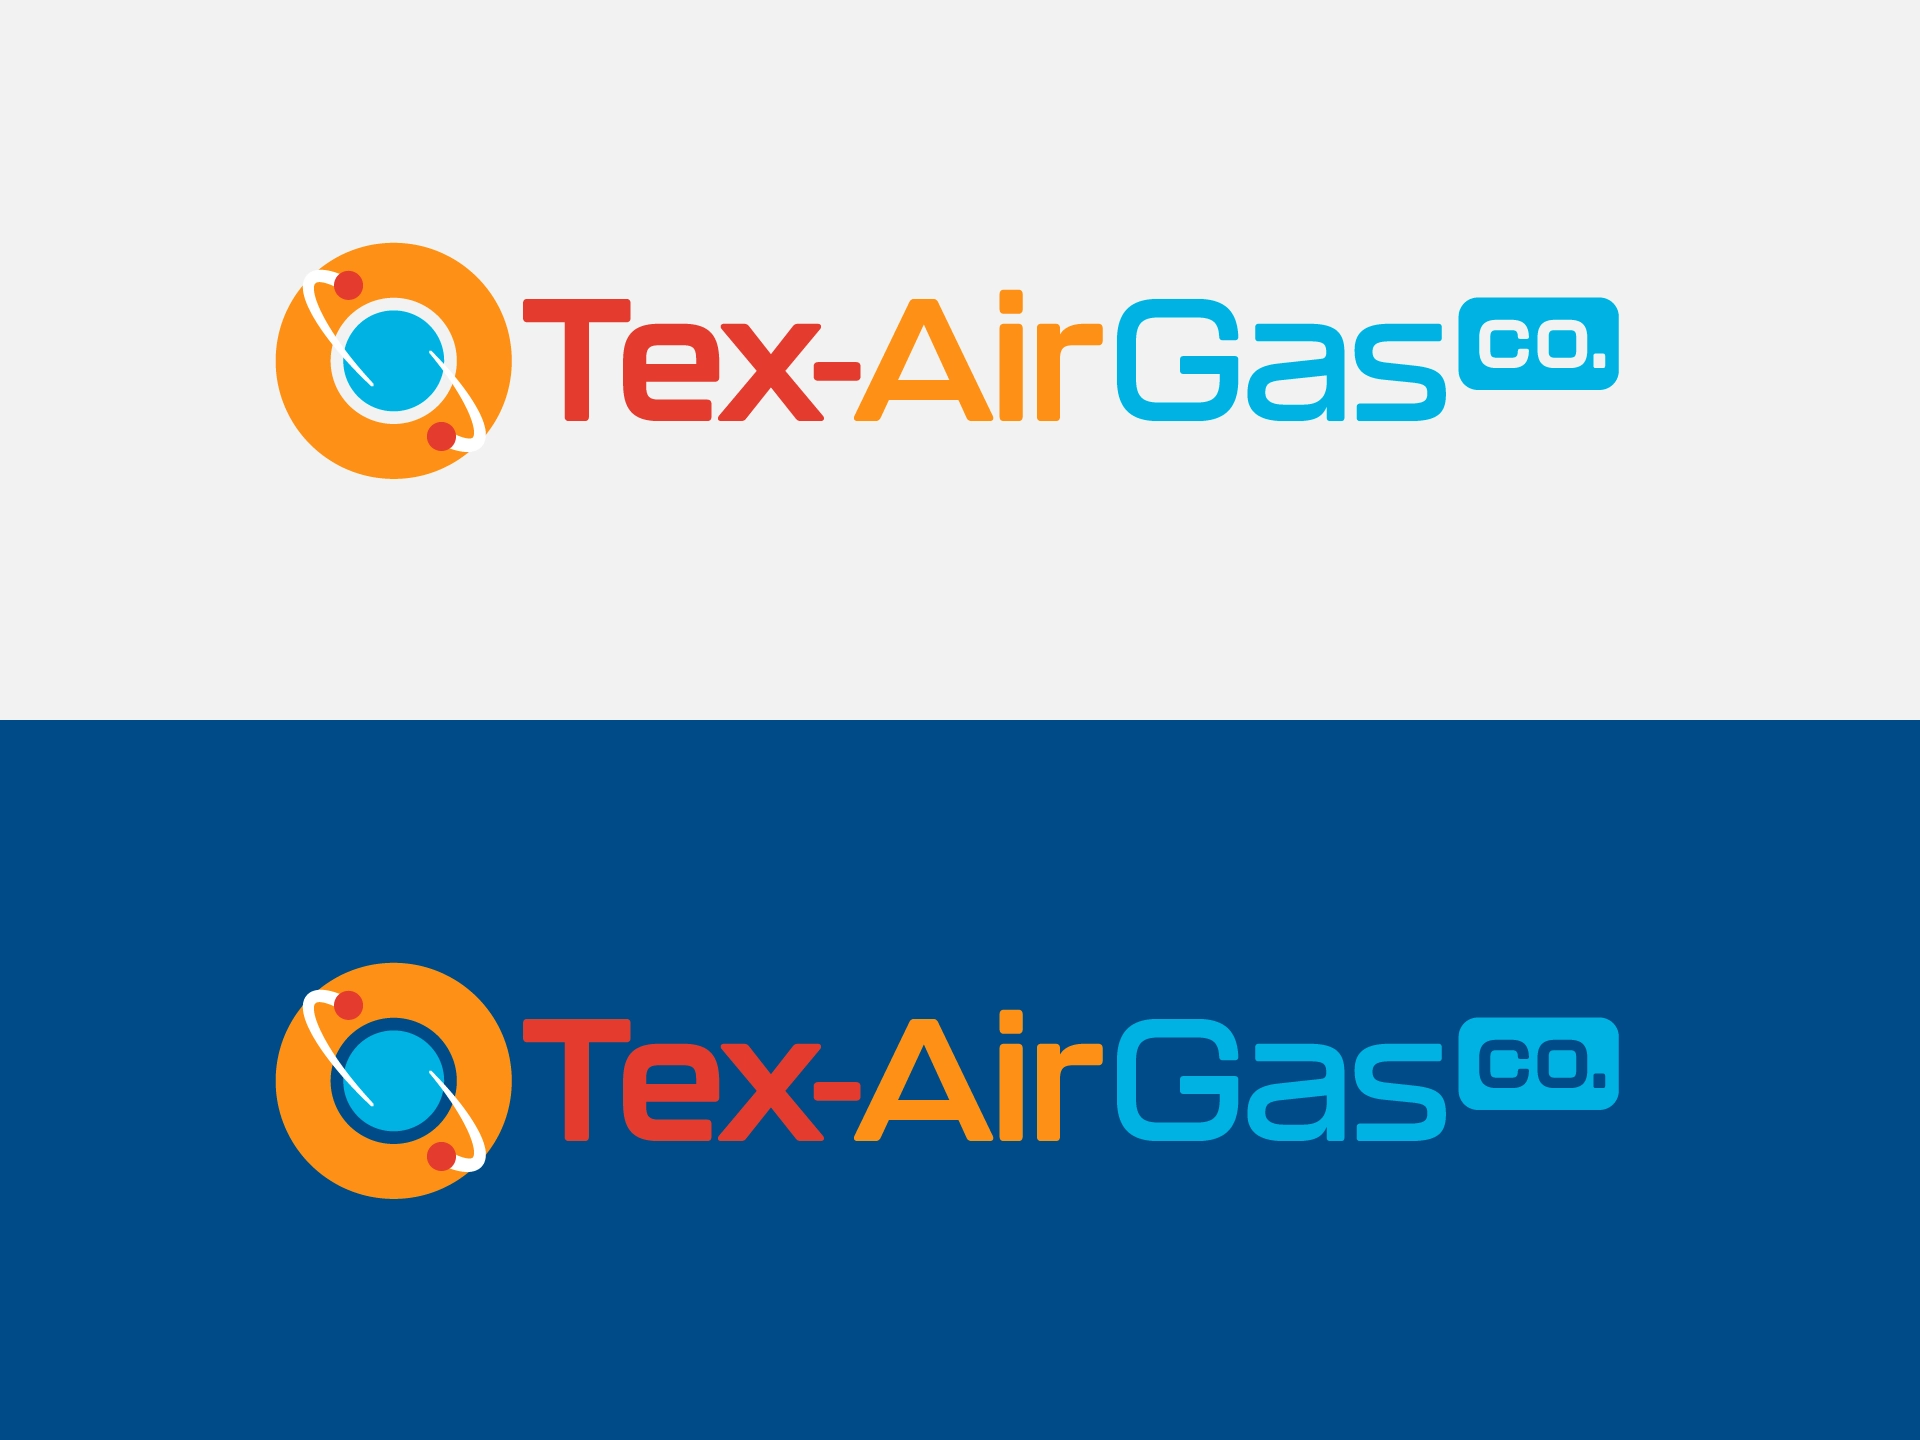 Tex-Air Gas Co. horizontal logo lockup